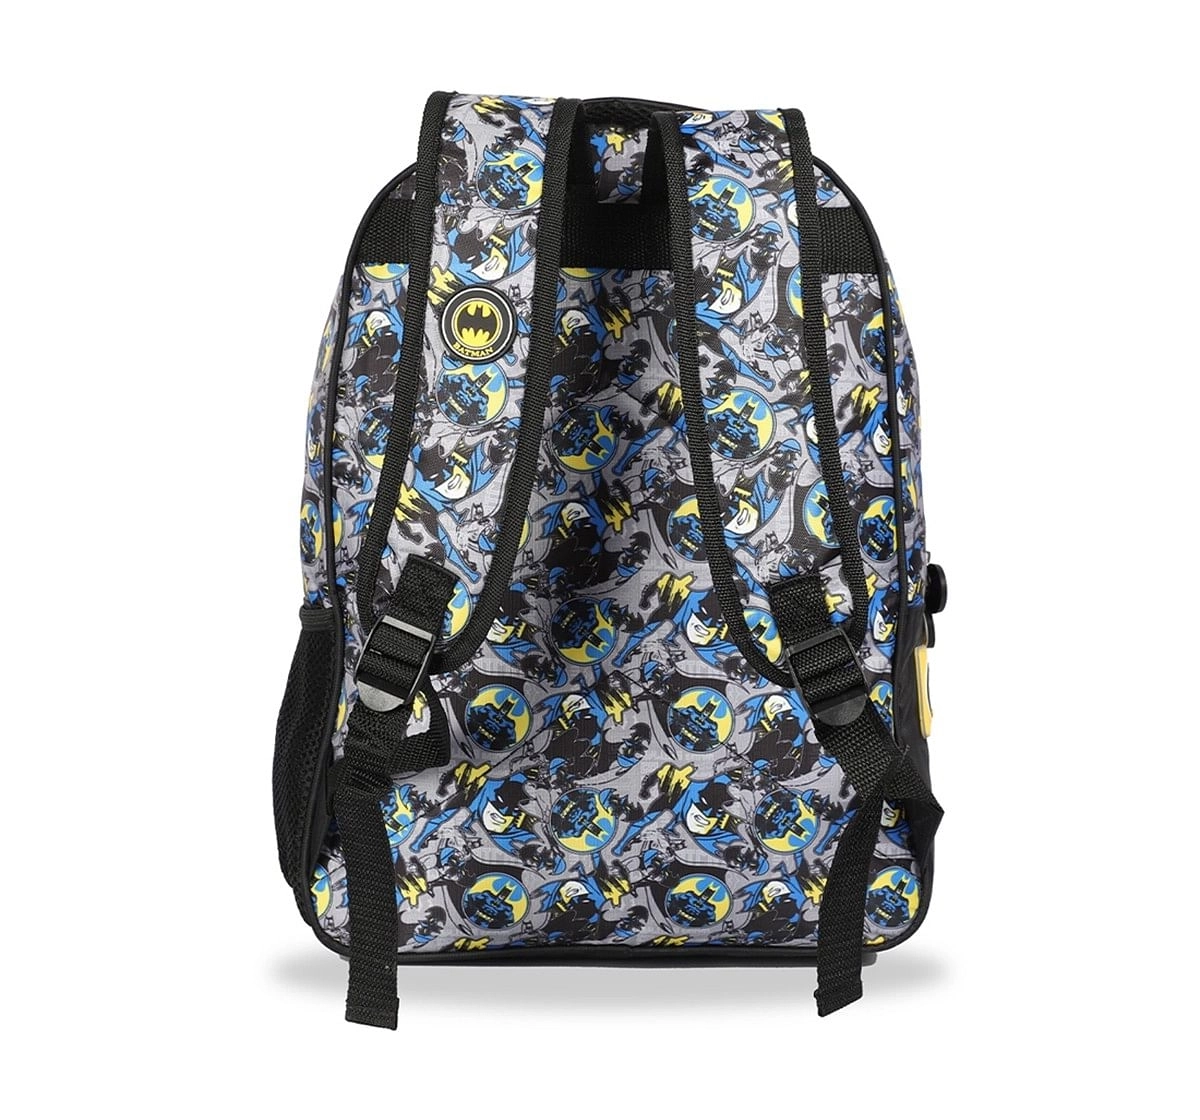 Dc Batman Hood School Bag 41 Cm Bags for age 7Y+ 